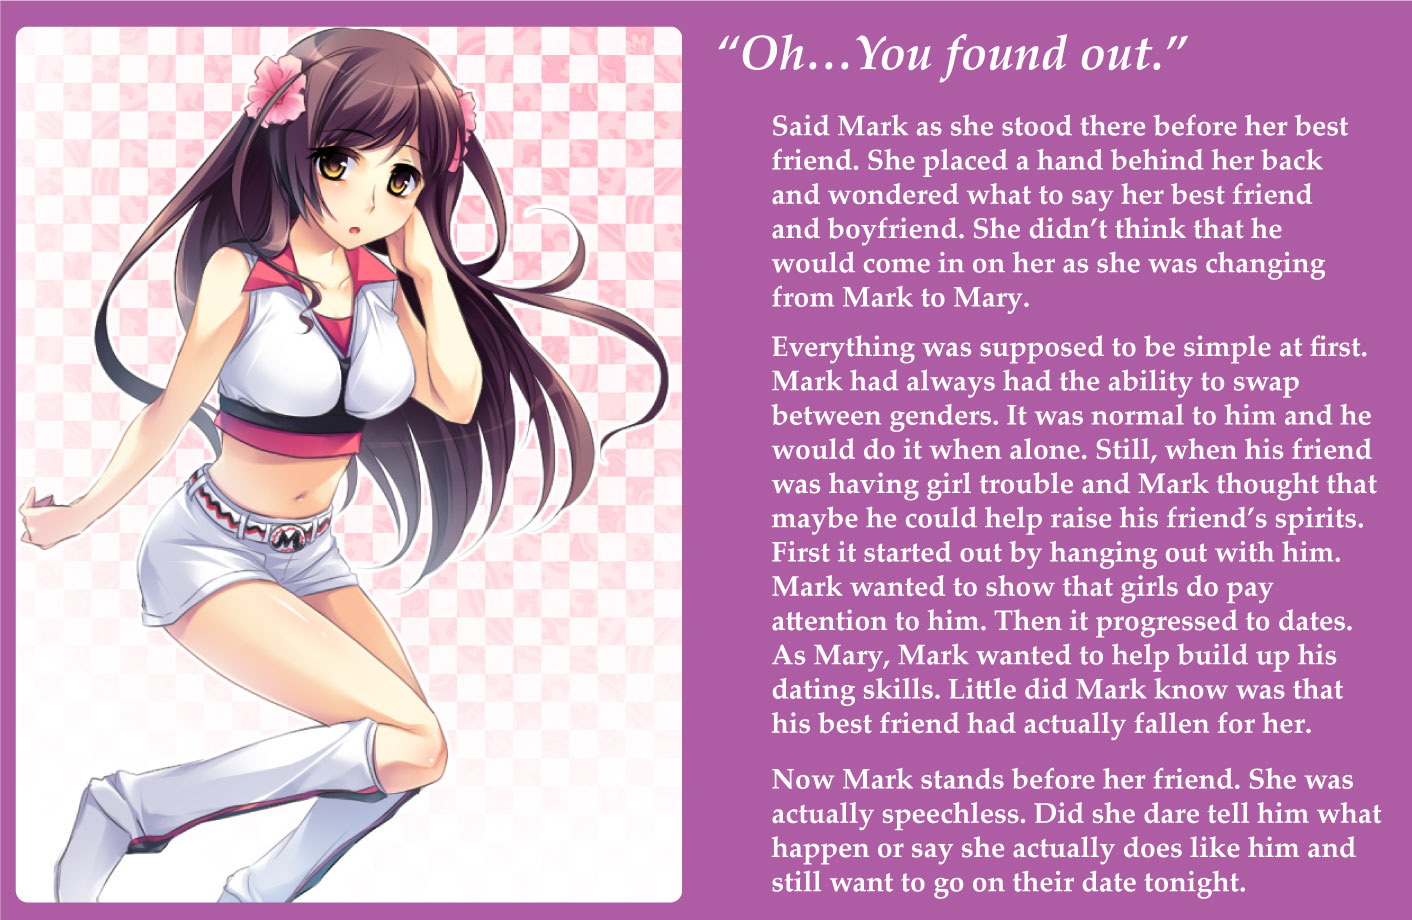 Tg Pics Captions Friend Chastity Captions Manga, screenshots of hentai, and...